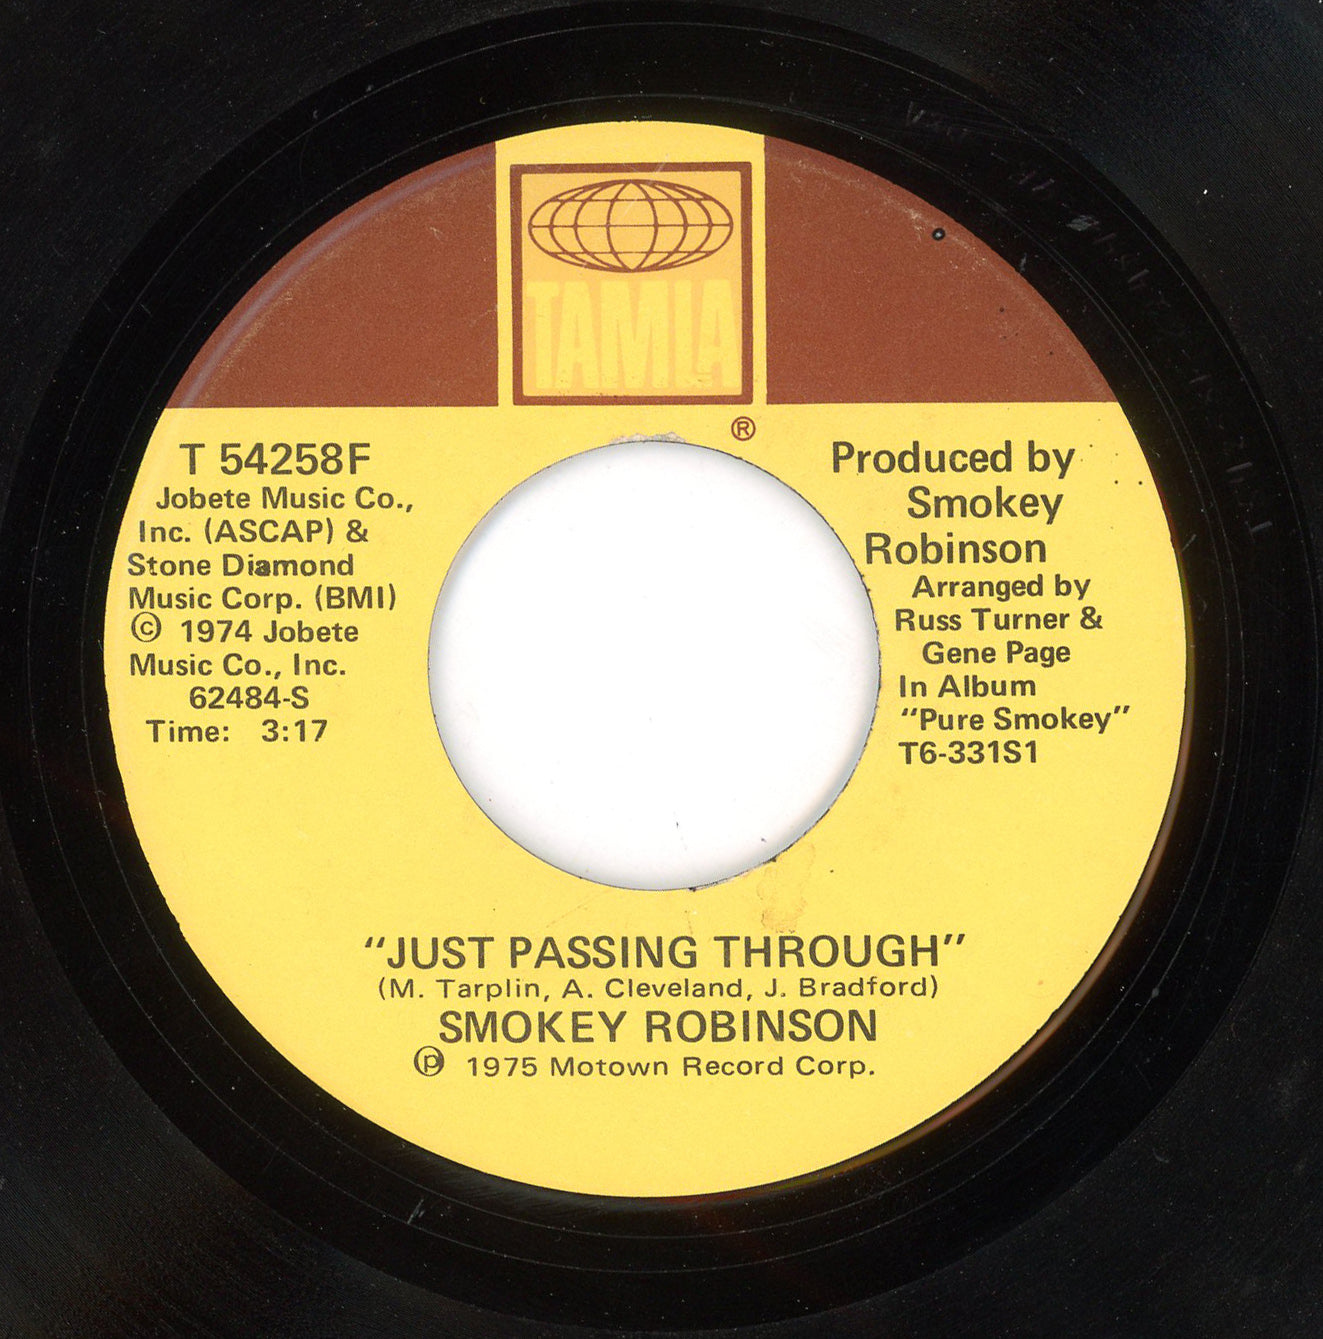 Smokey Robinson - Baby That's Backatcha / Just Passing Through  7"